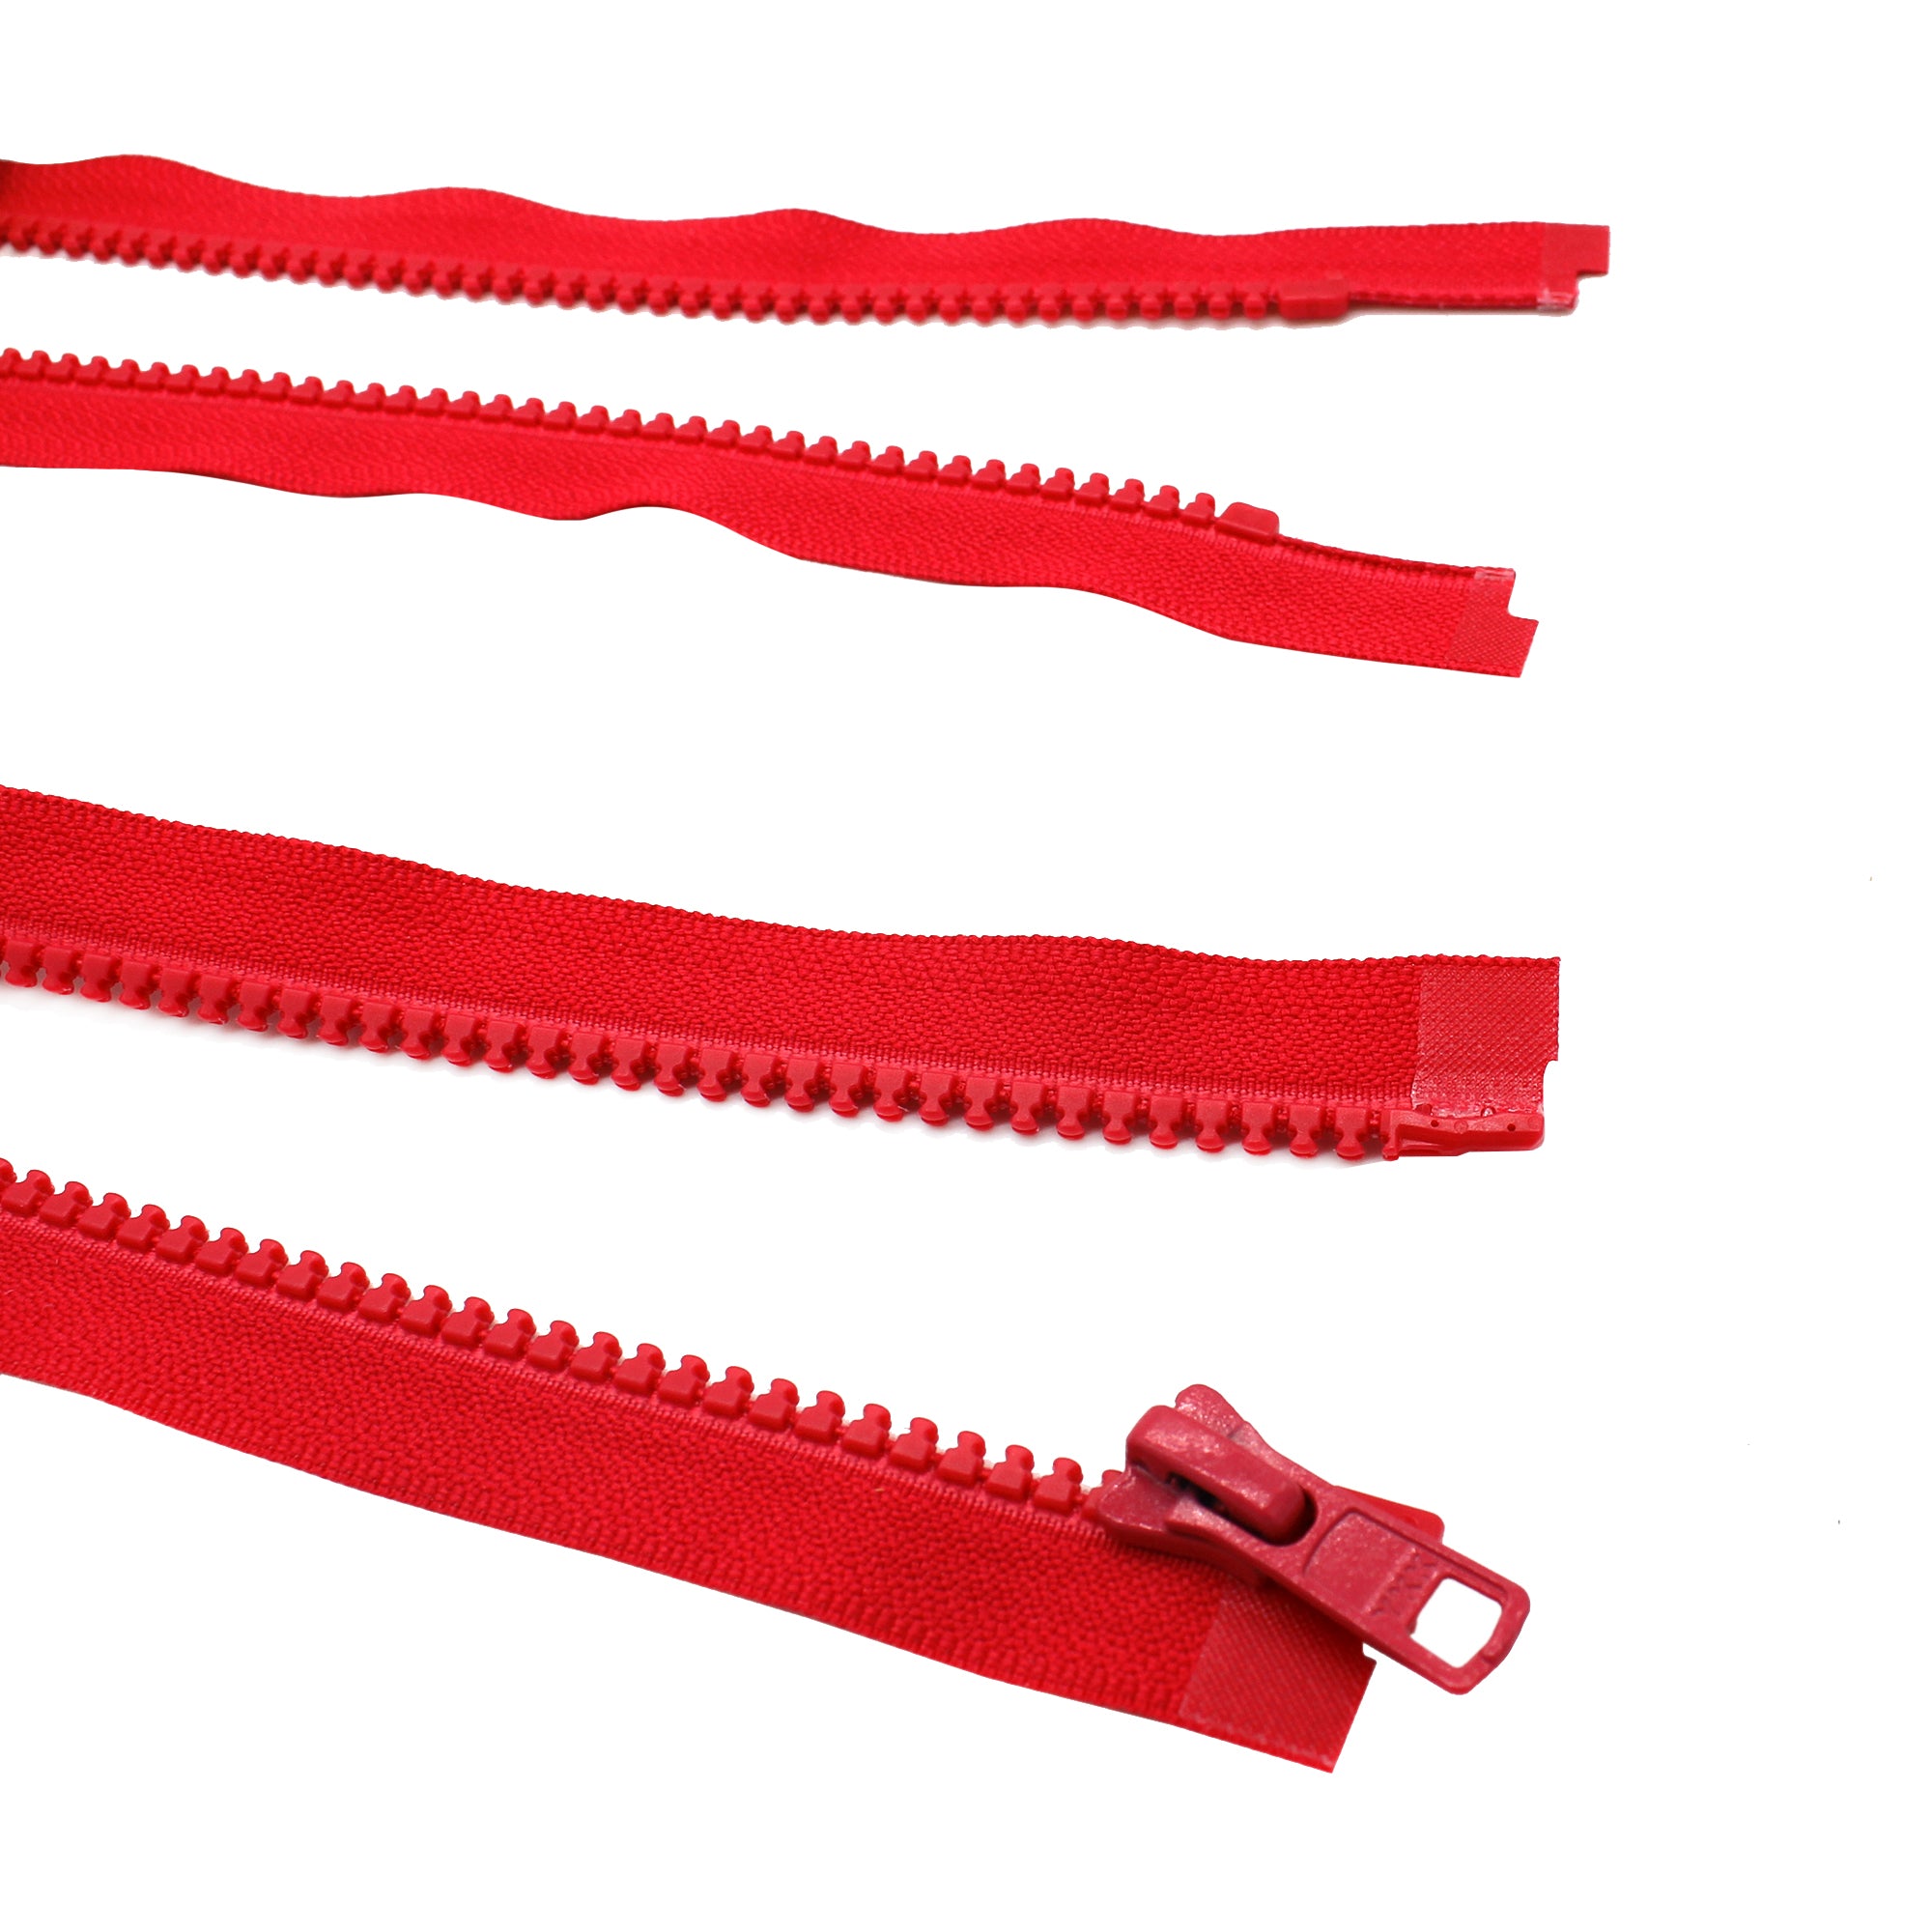 YKK # 5 Medium Weight Molded Plastic Separating Zipper - 1 Zipper per Pack  (Brown - #570) (16)